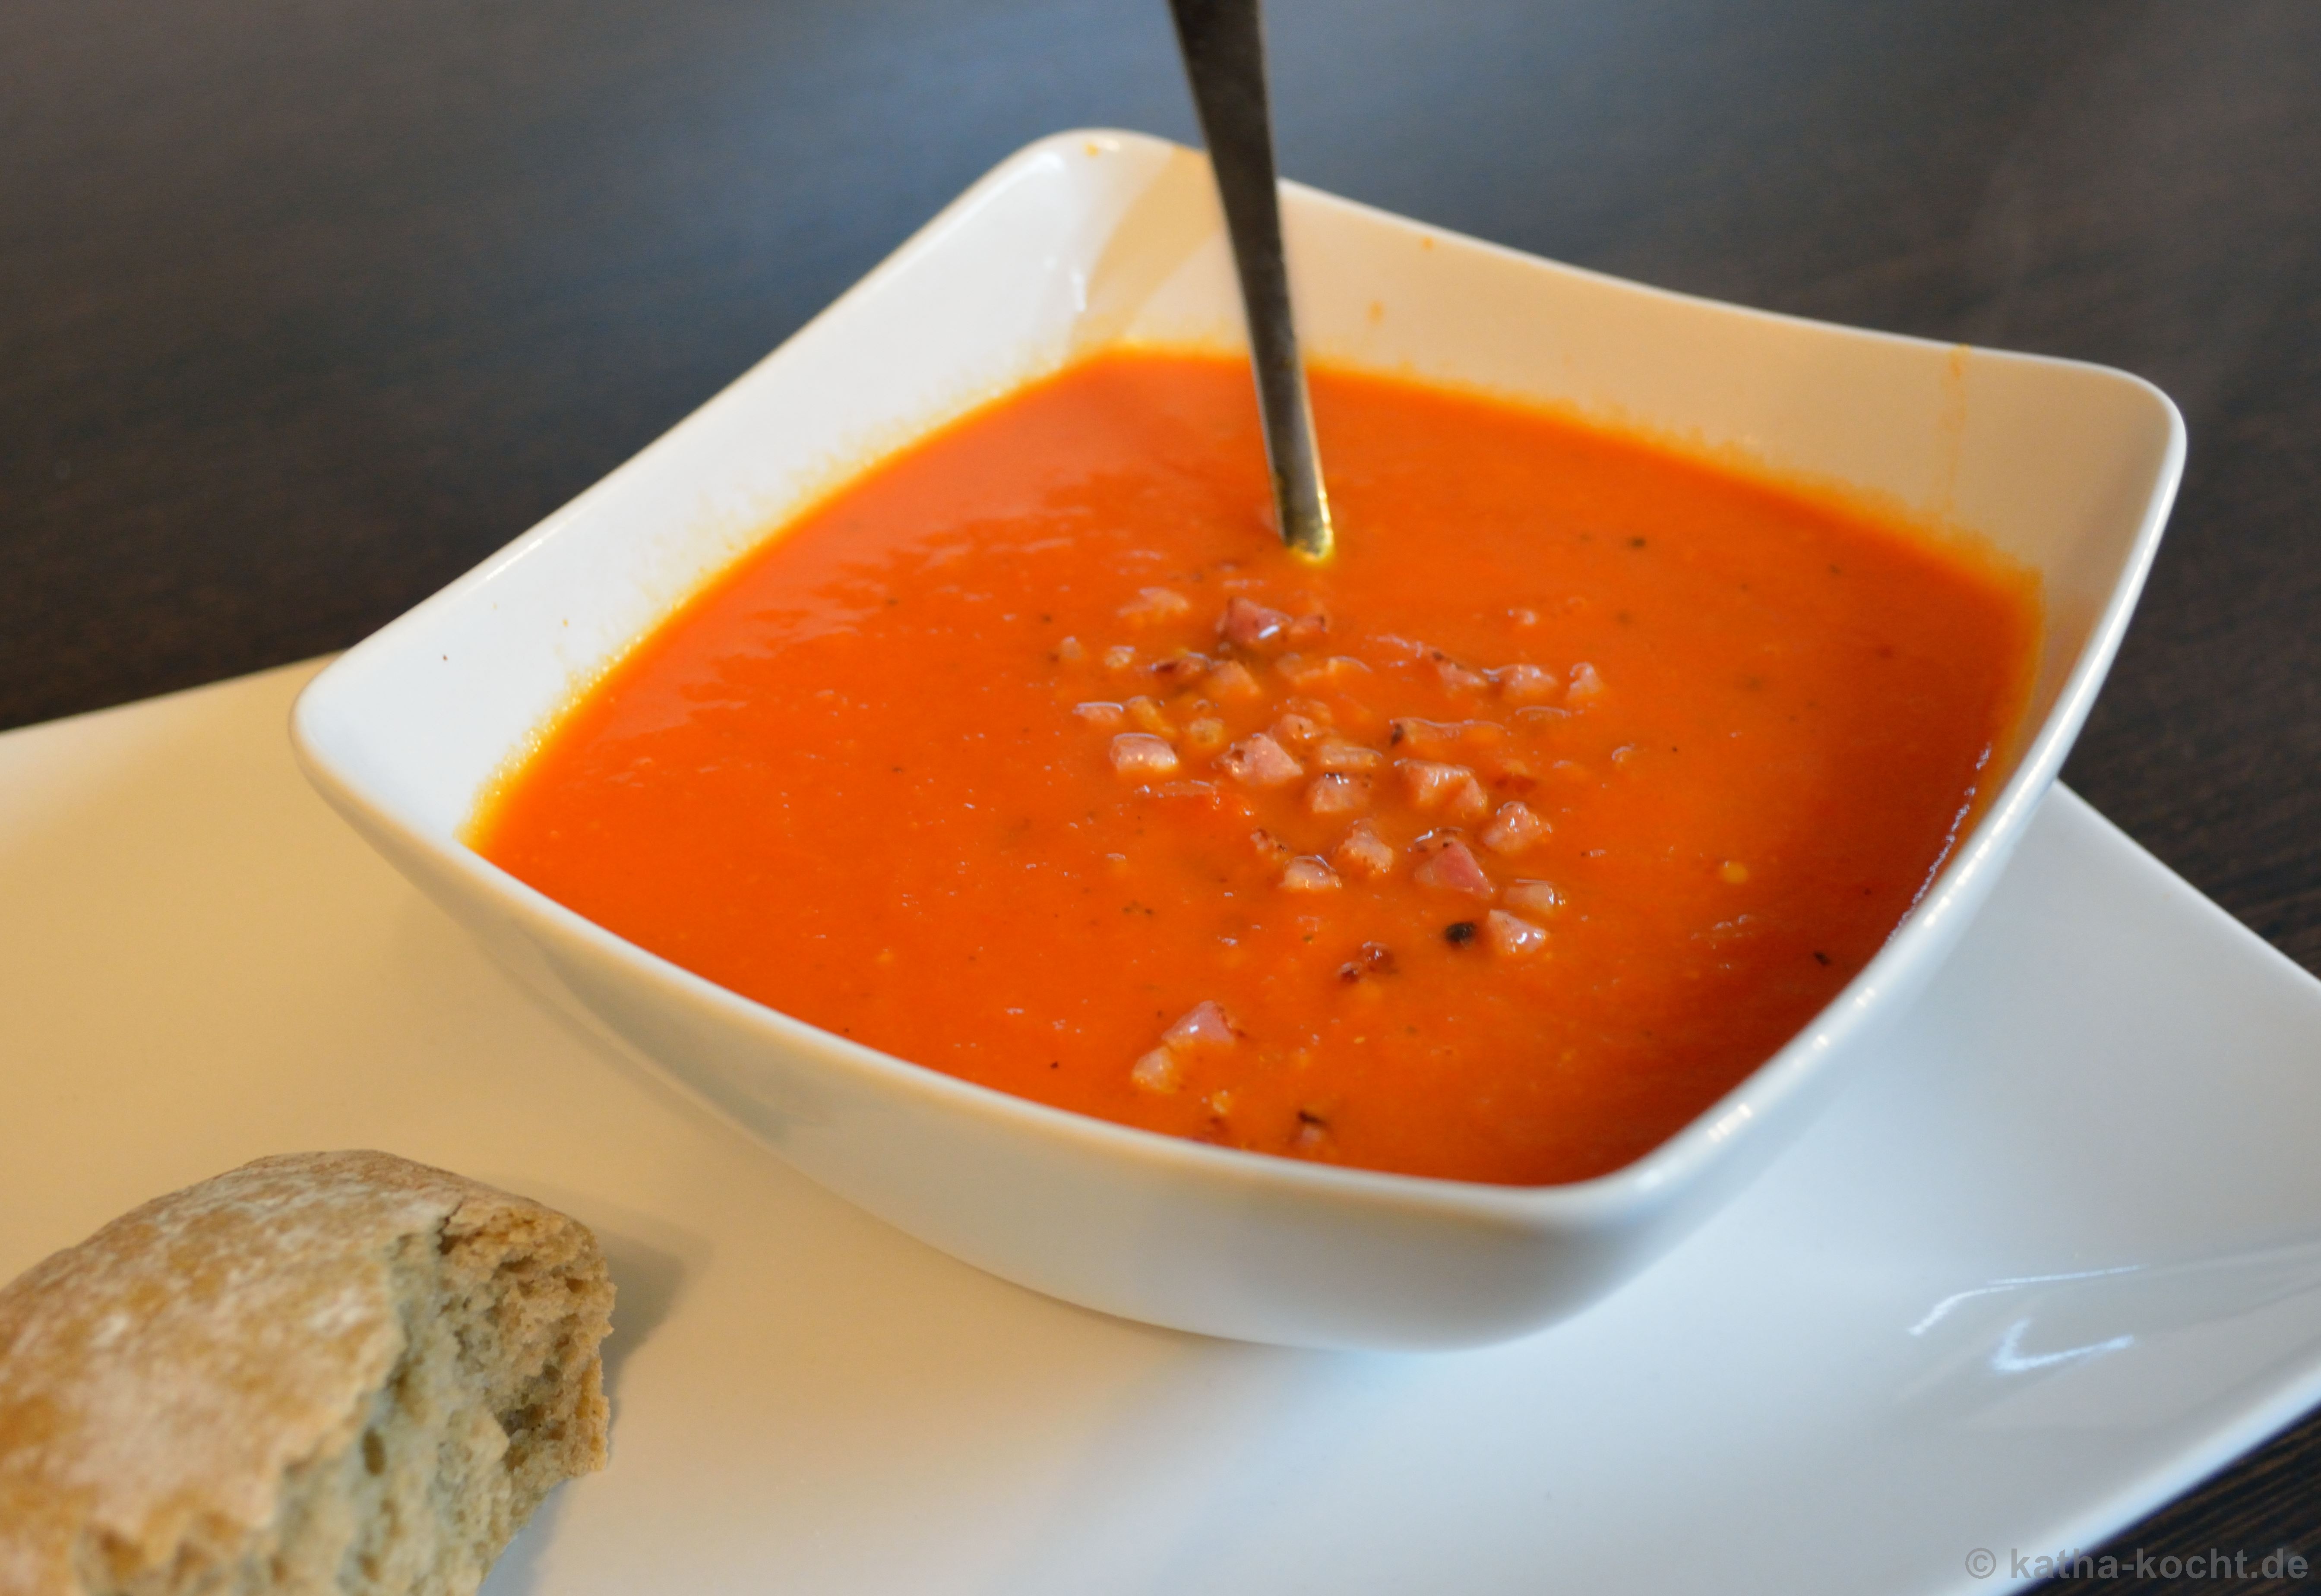 Tomaten-Sherry Suppe mit Speck - Katha-kocht!